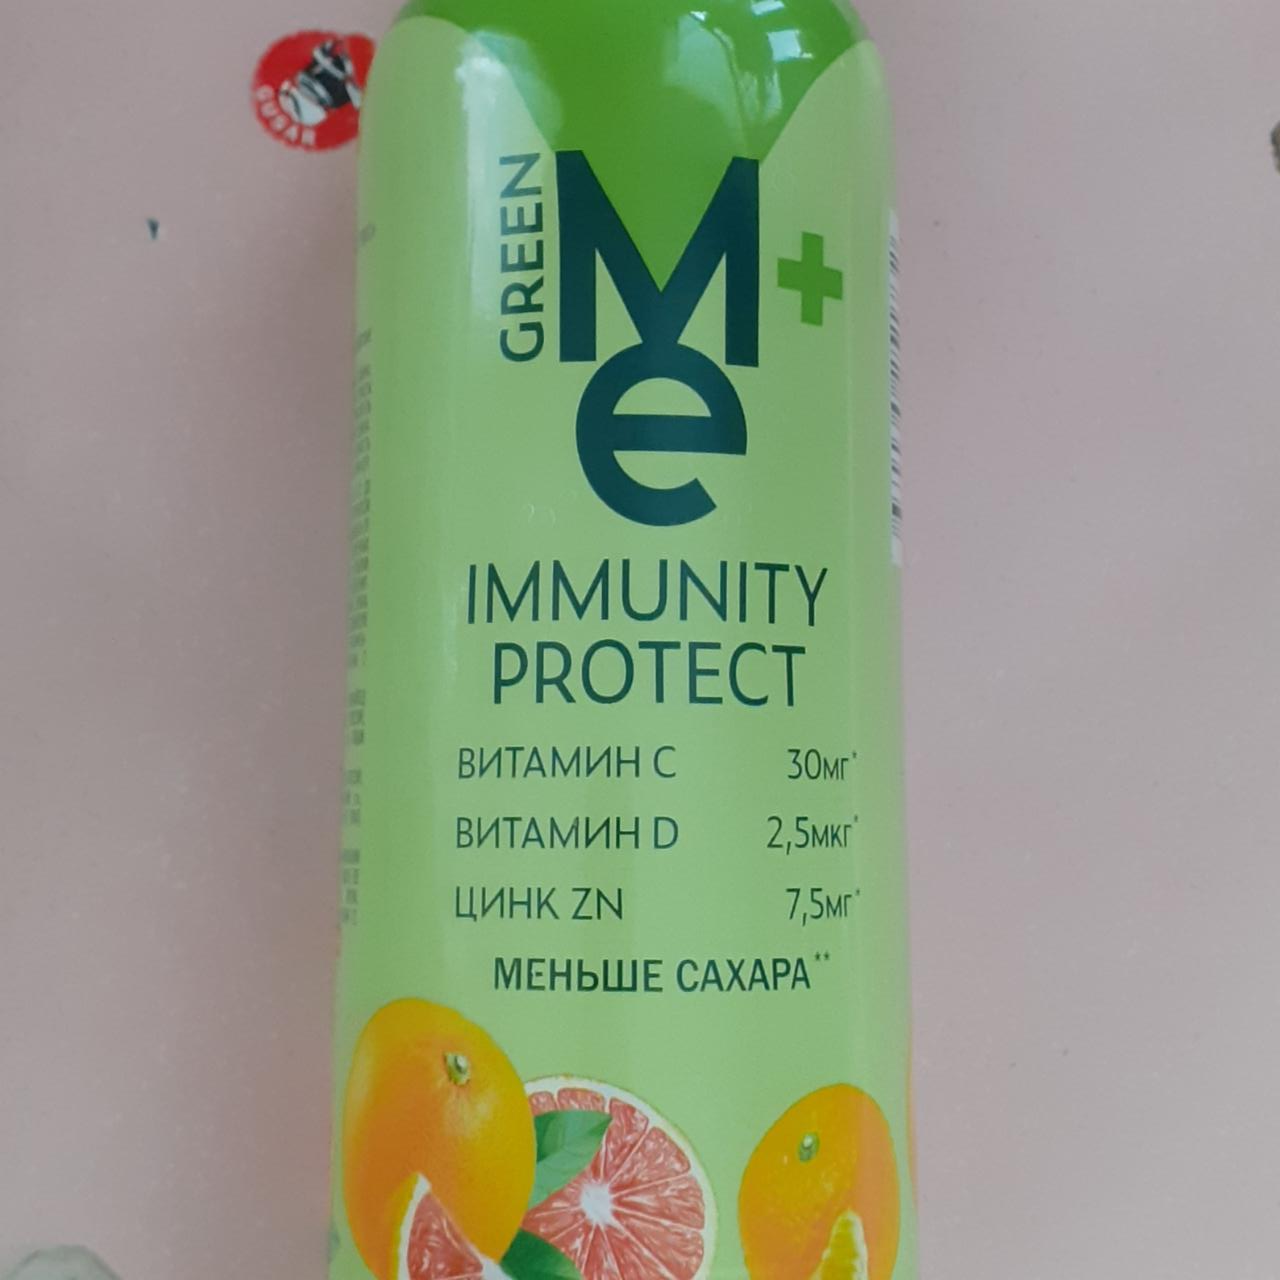 Фото - Plus immunity protect max Greenme